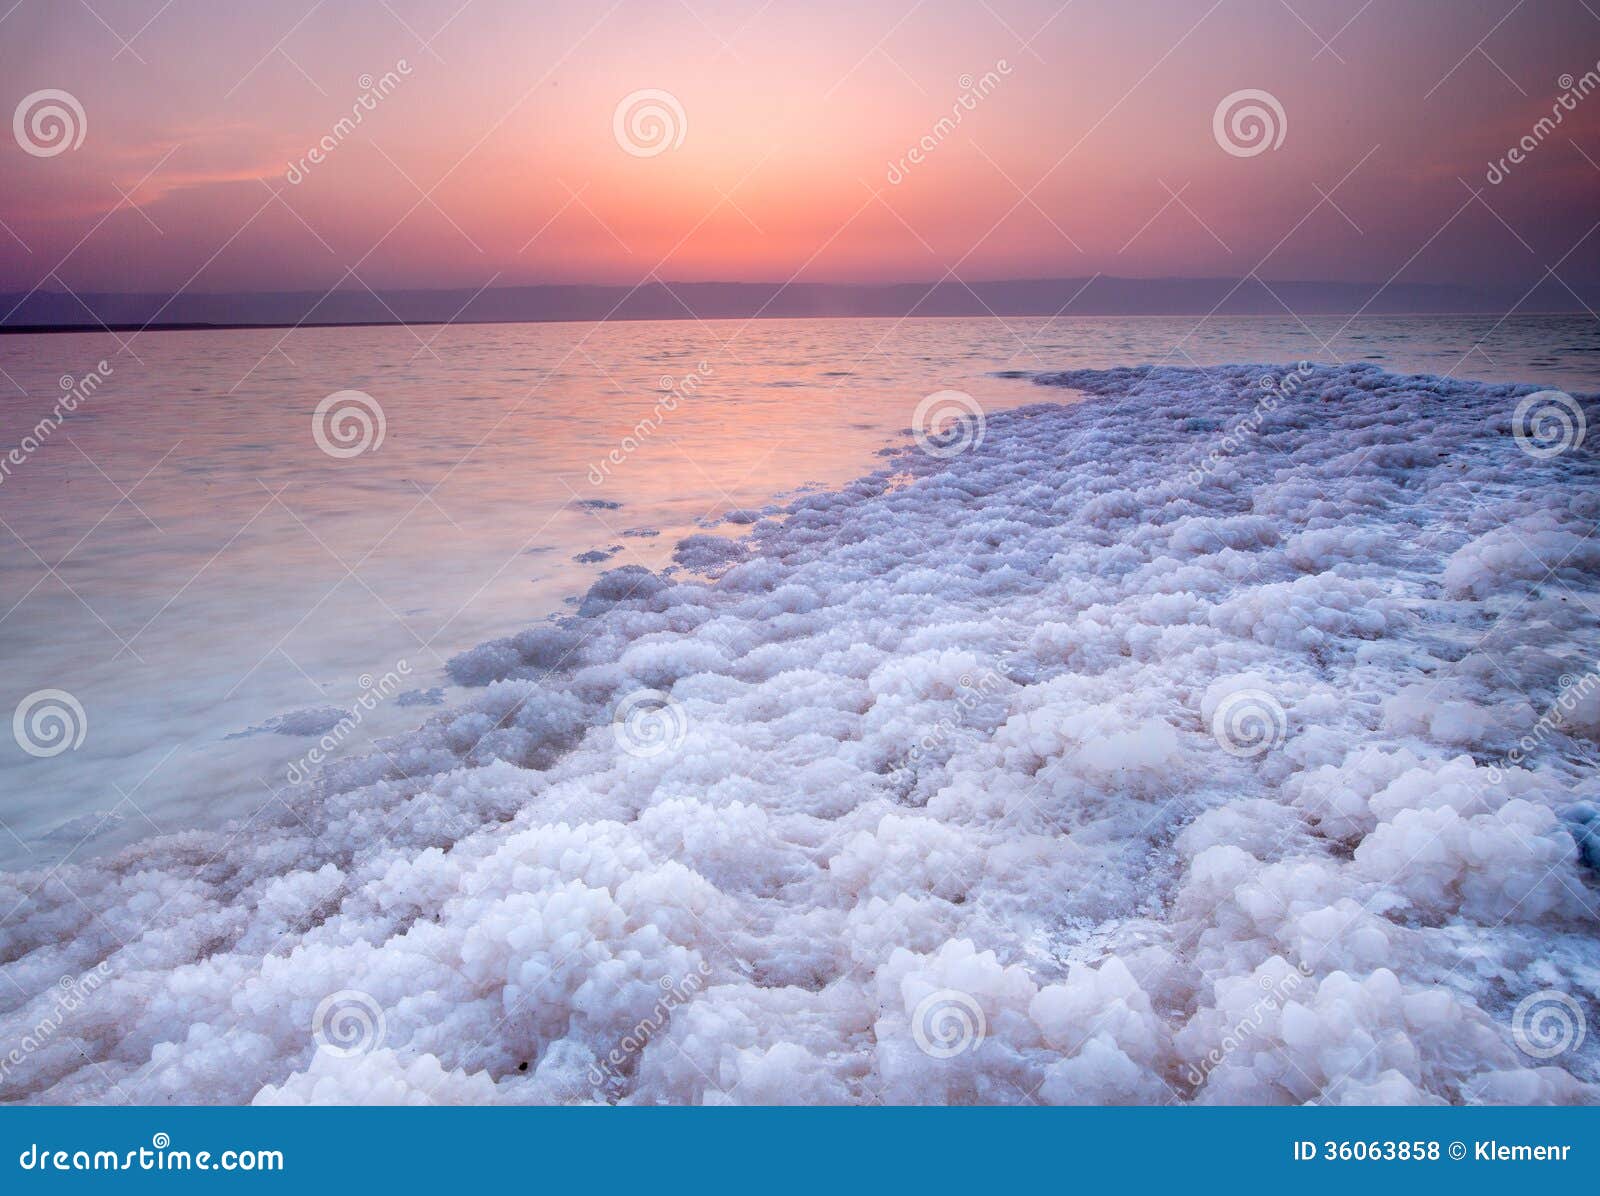 sunset at dead sea, jordan